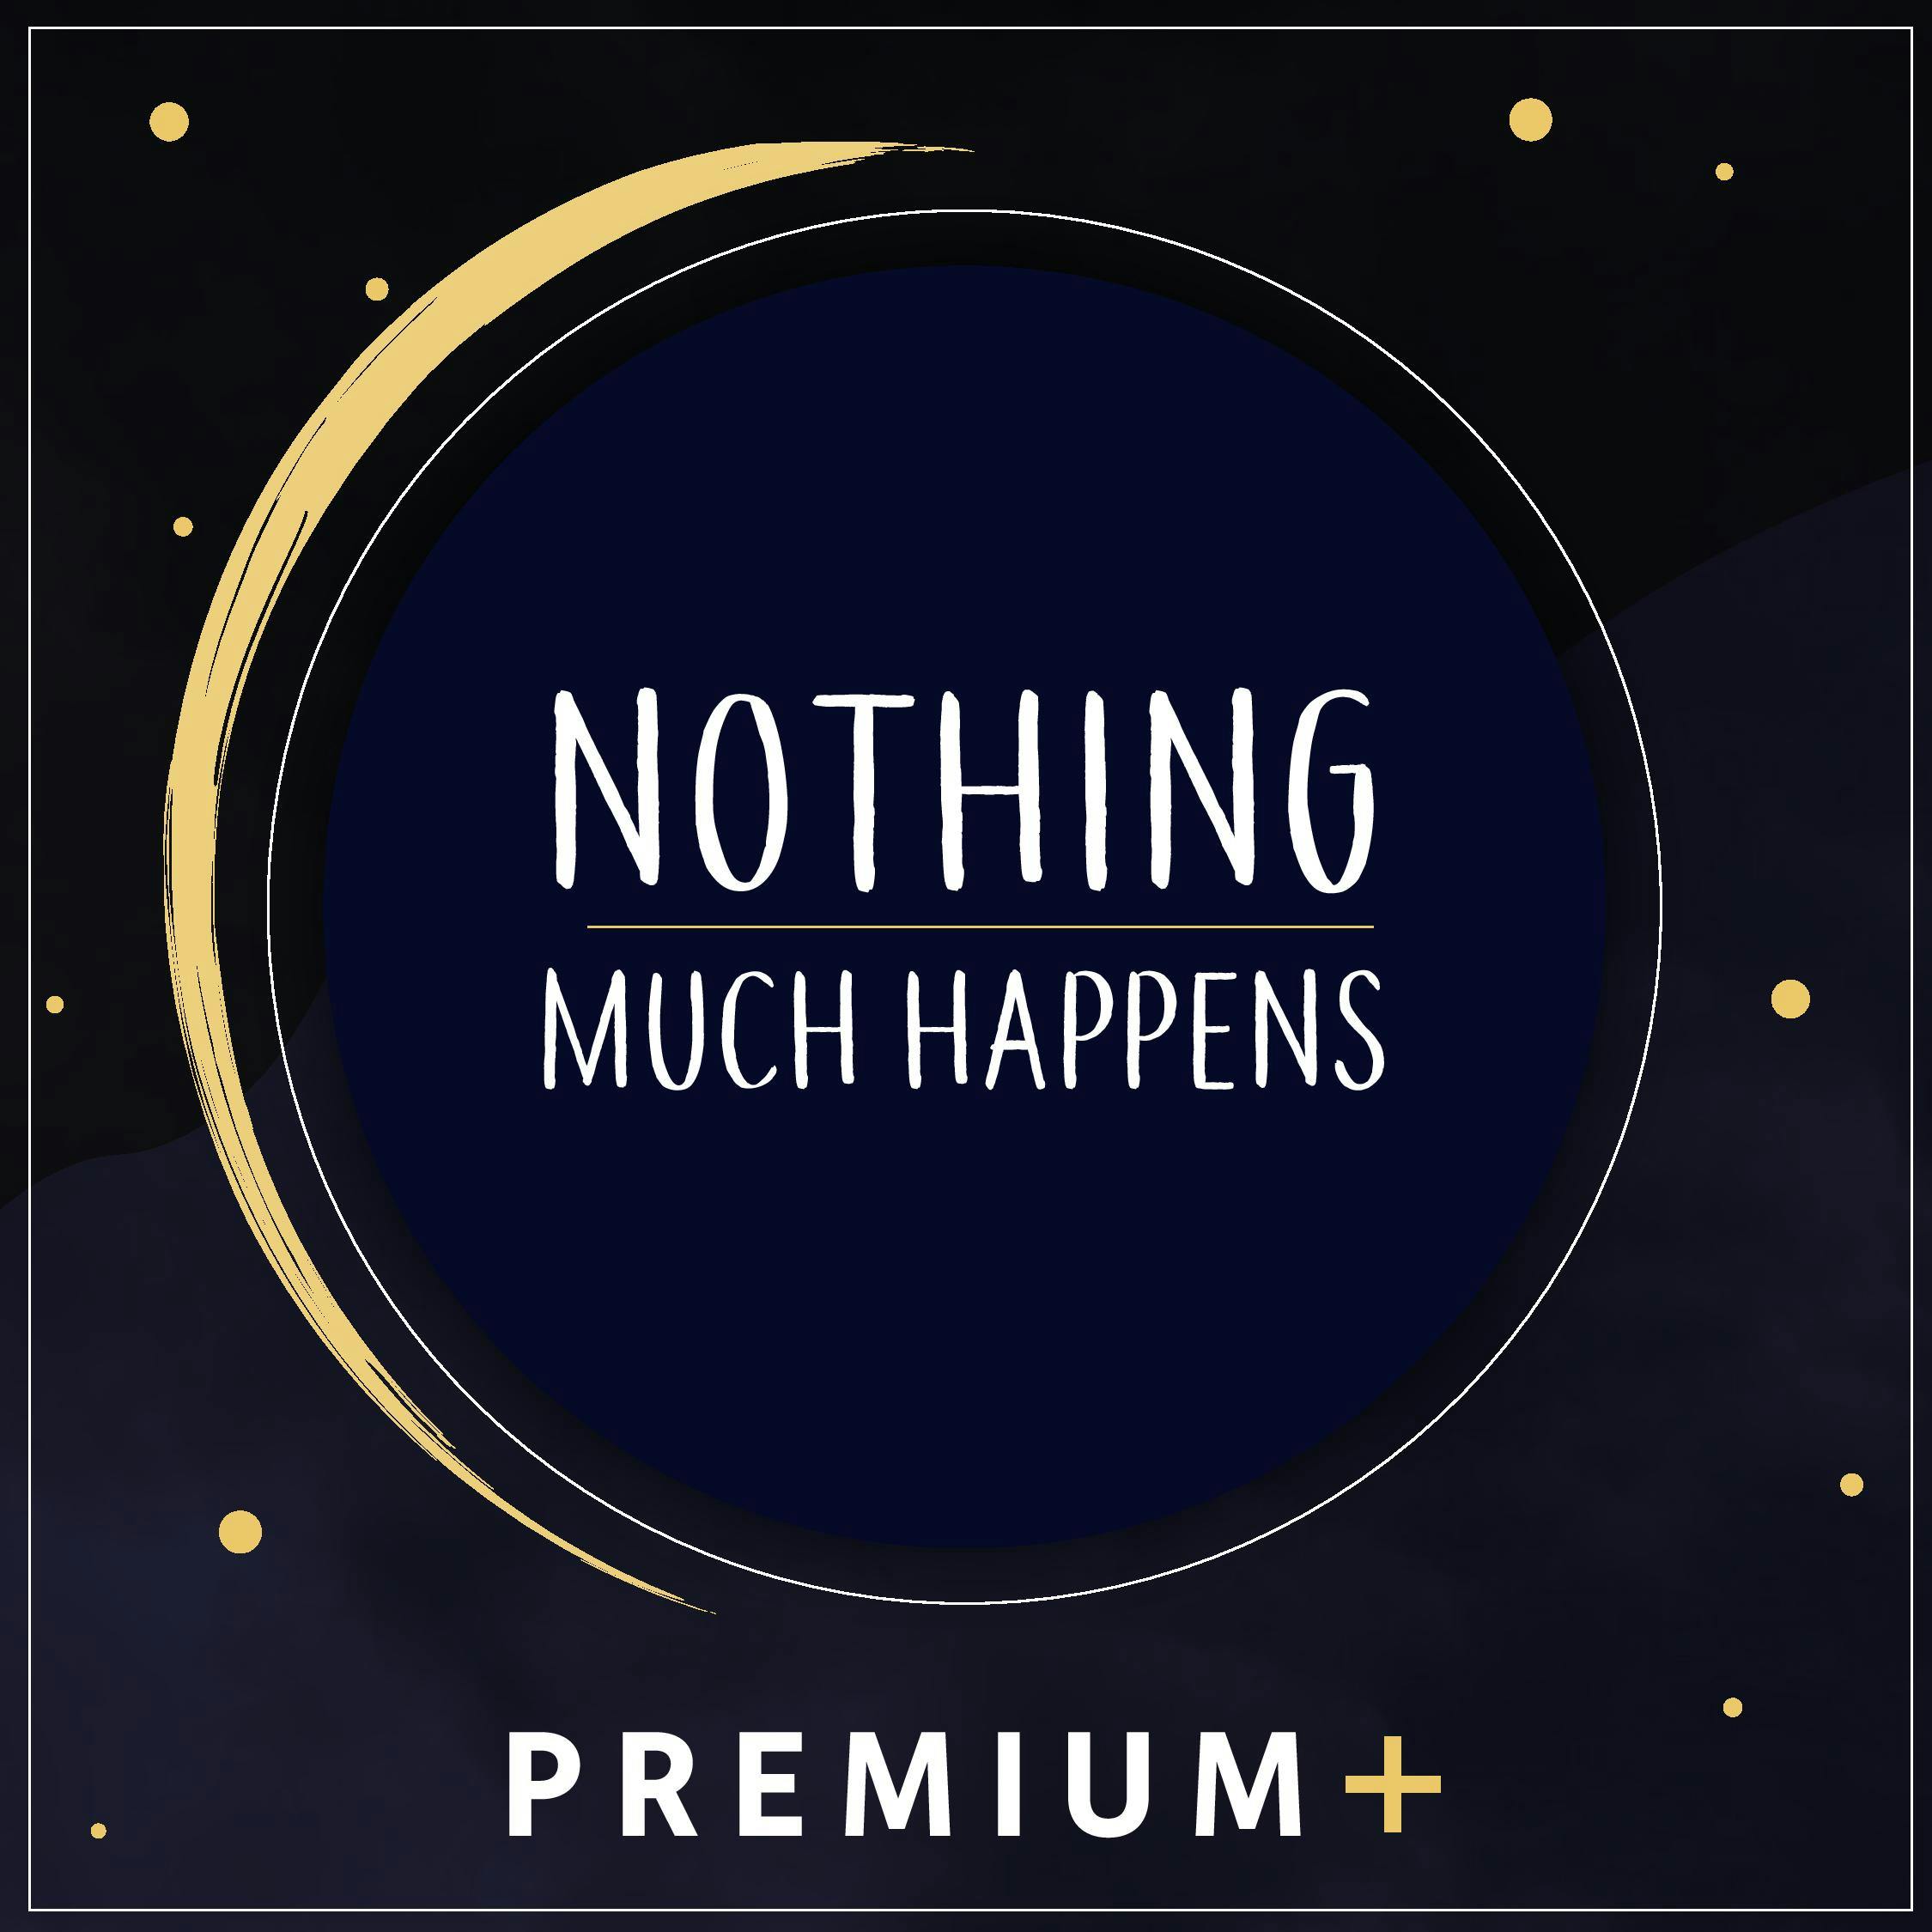 Nothing Much Happens Premium PLUS podcast tile